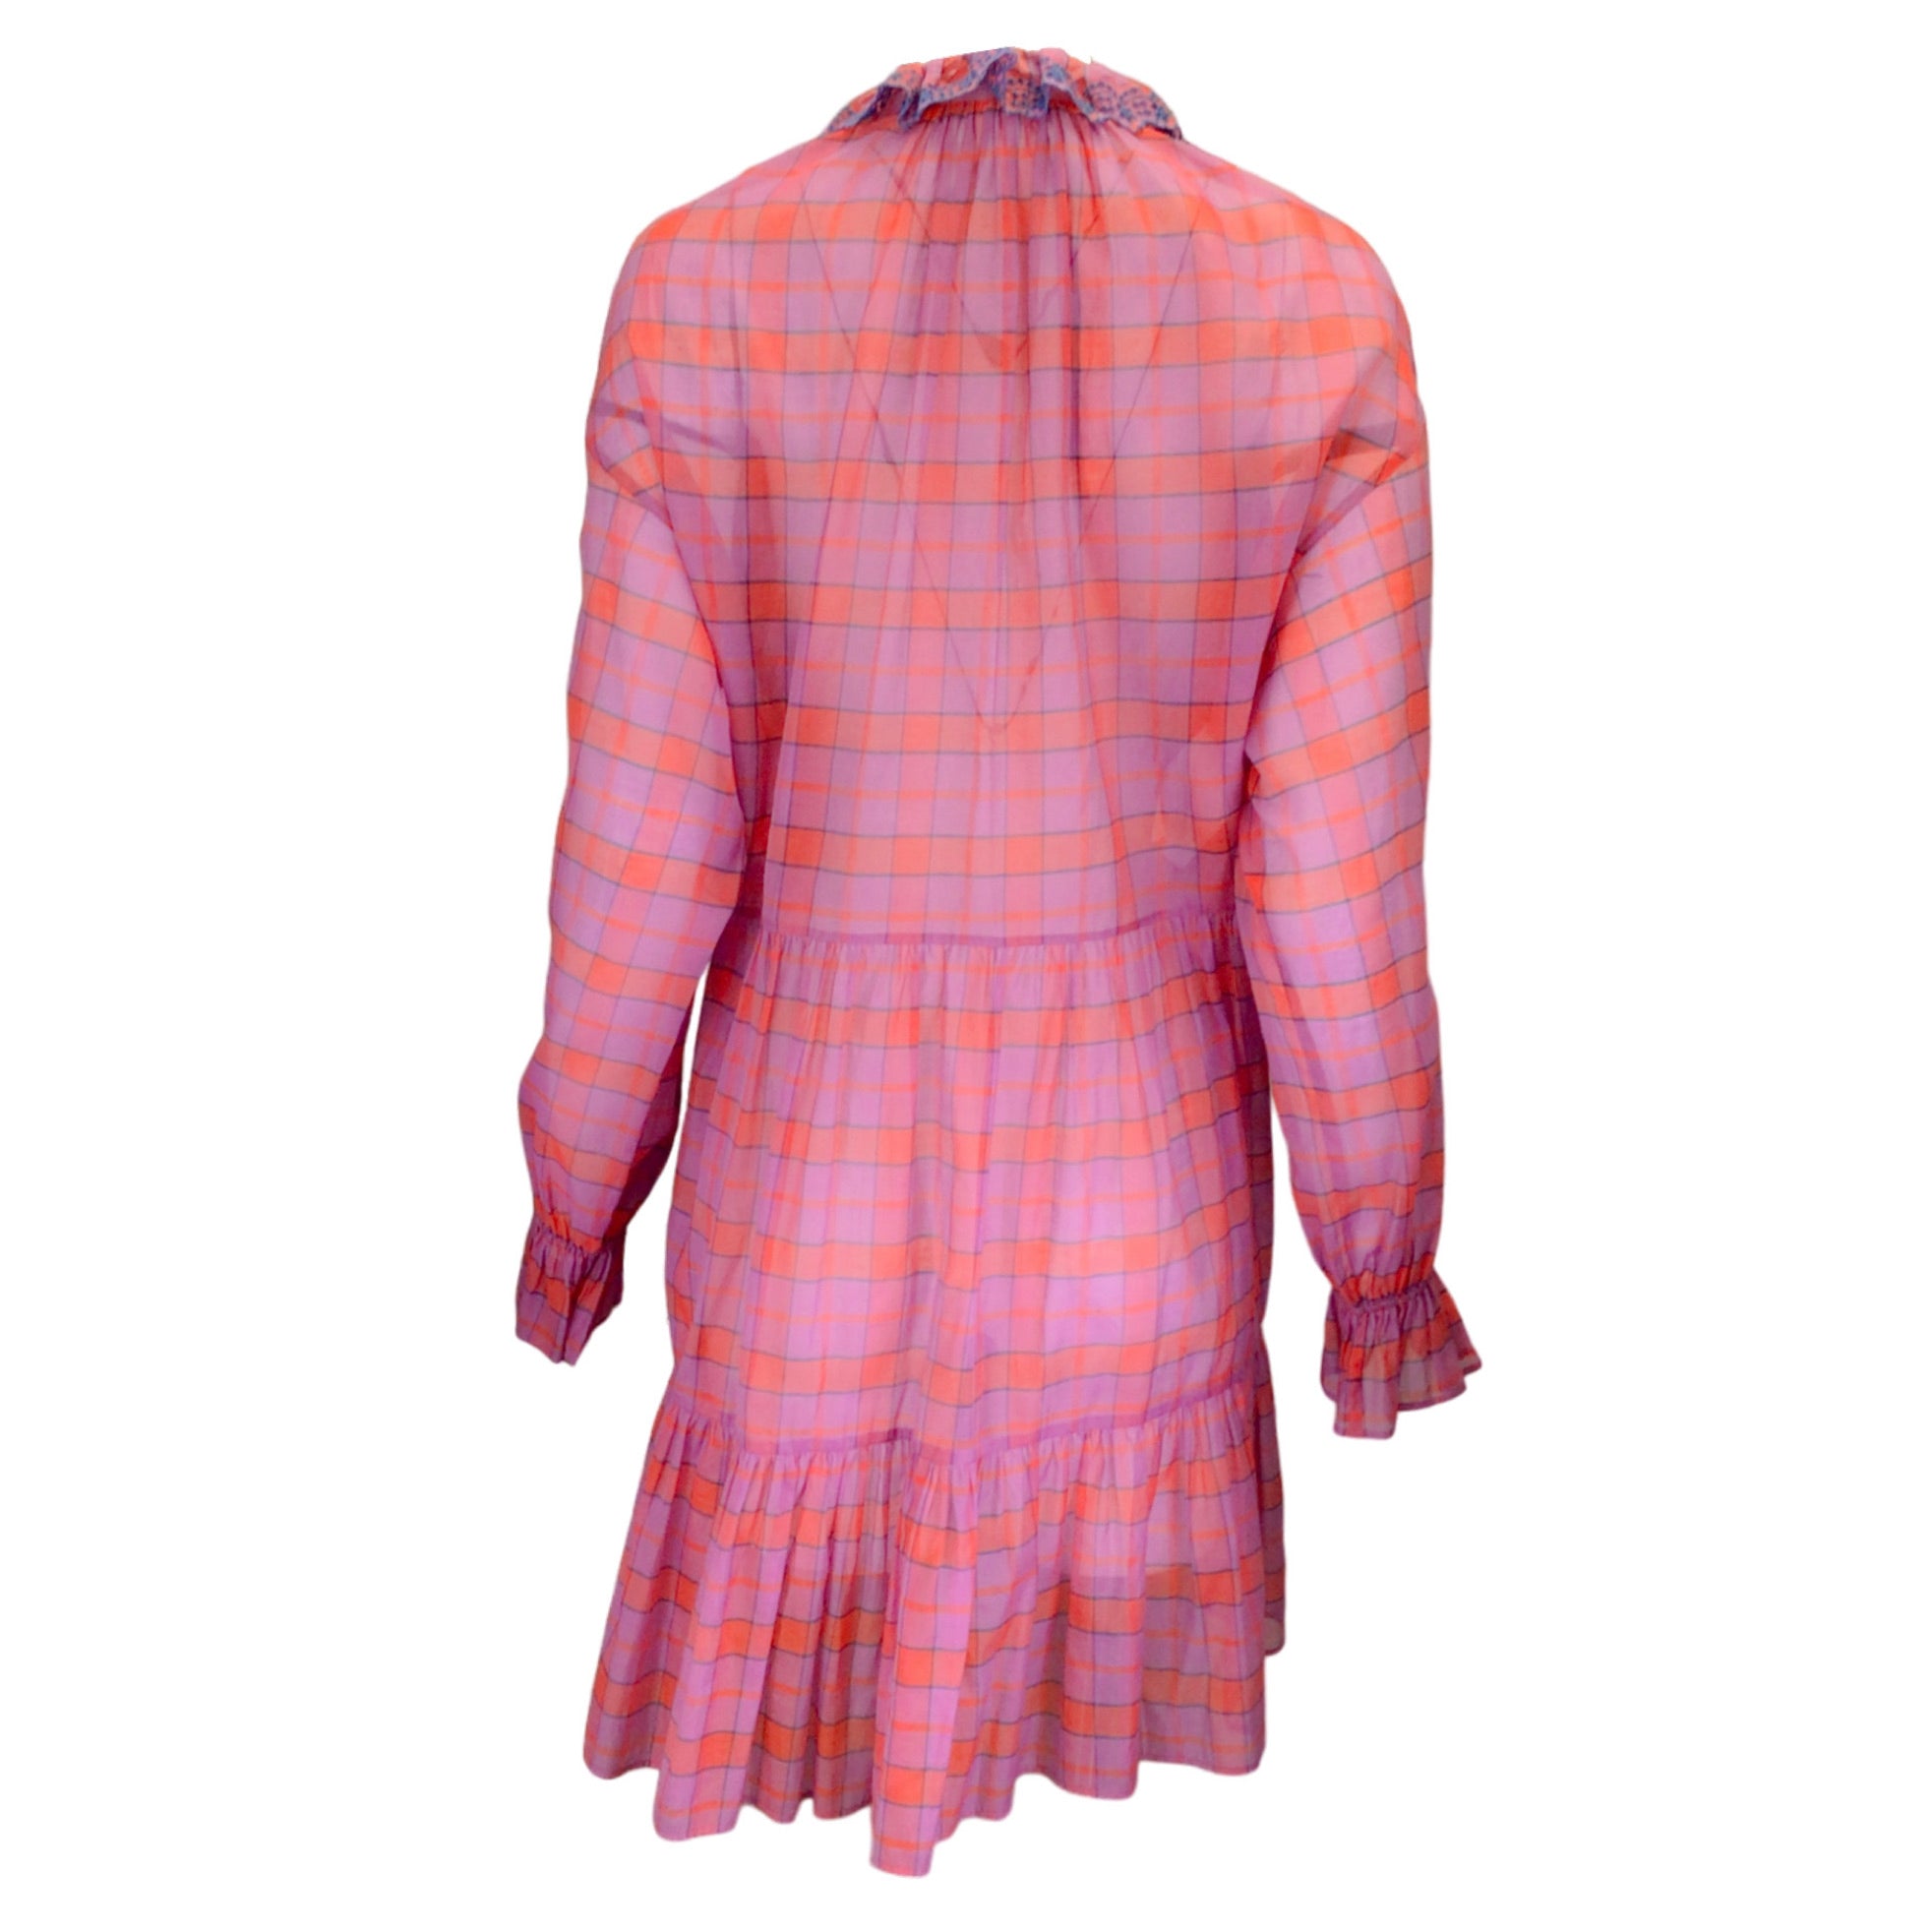 Philosophy di Lorenzo Serafini Red / Fuchsia Checkered Long Sleeved Cotton Dress